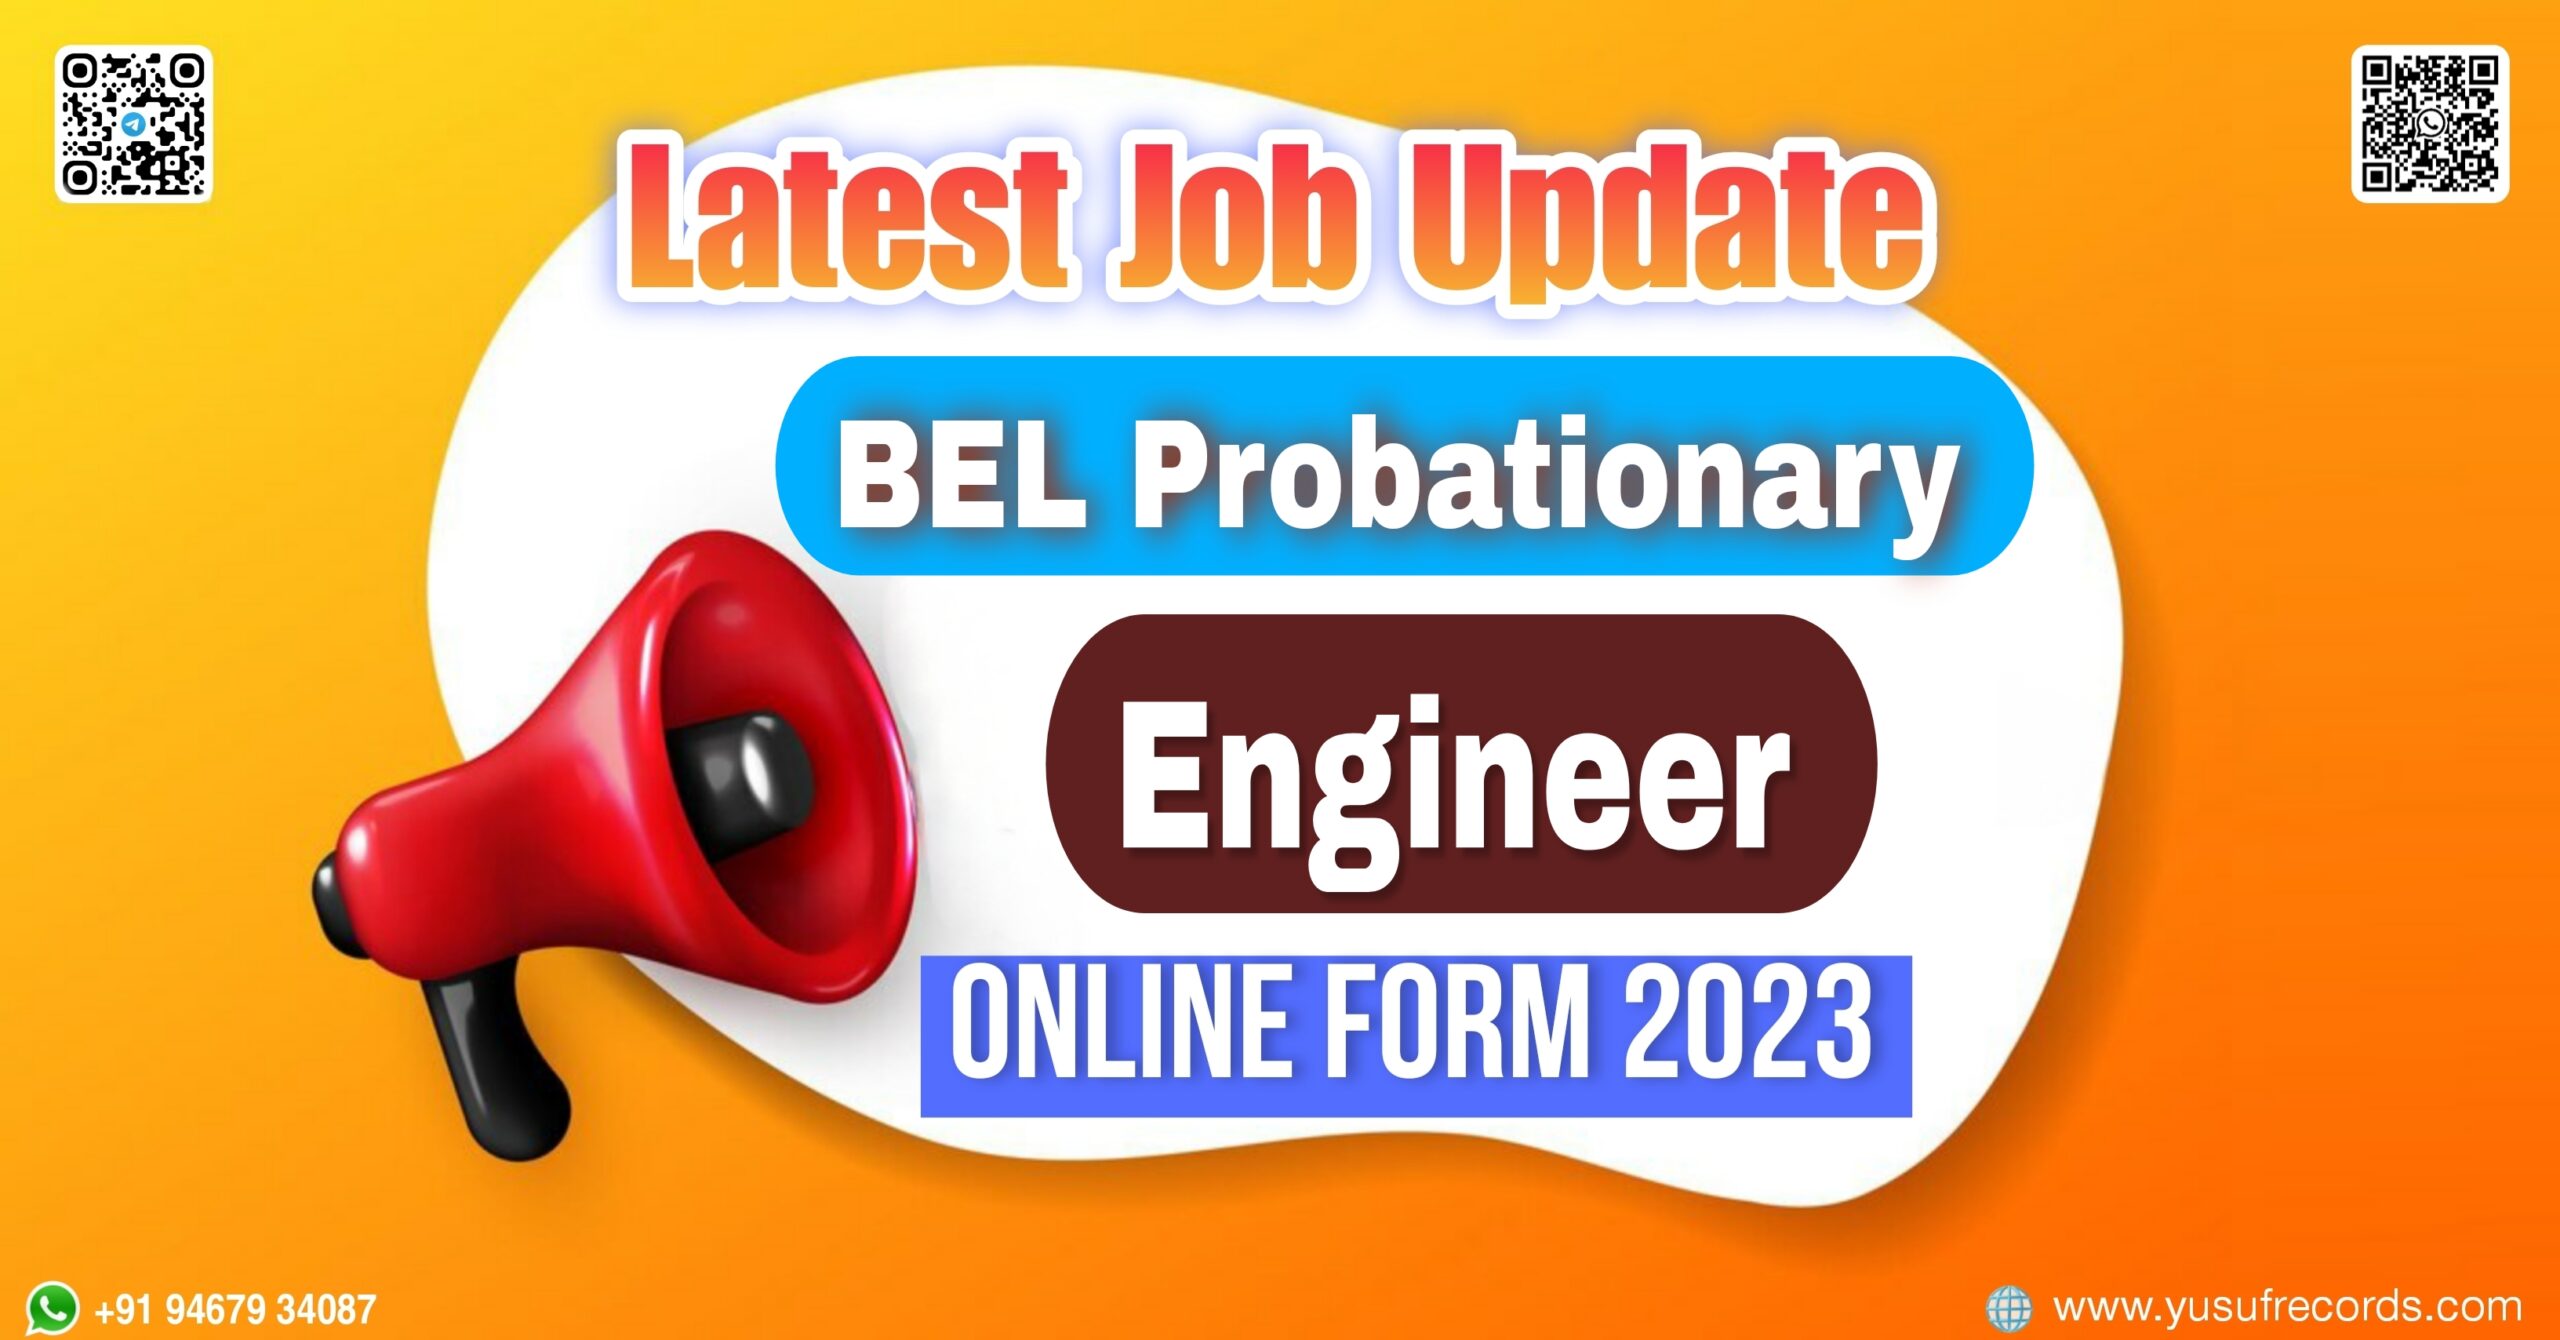 BEL Probationary Engineer Online Form 2023 yusufrecords